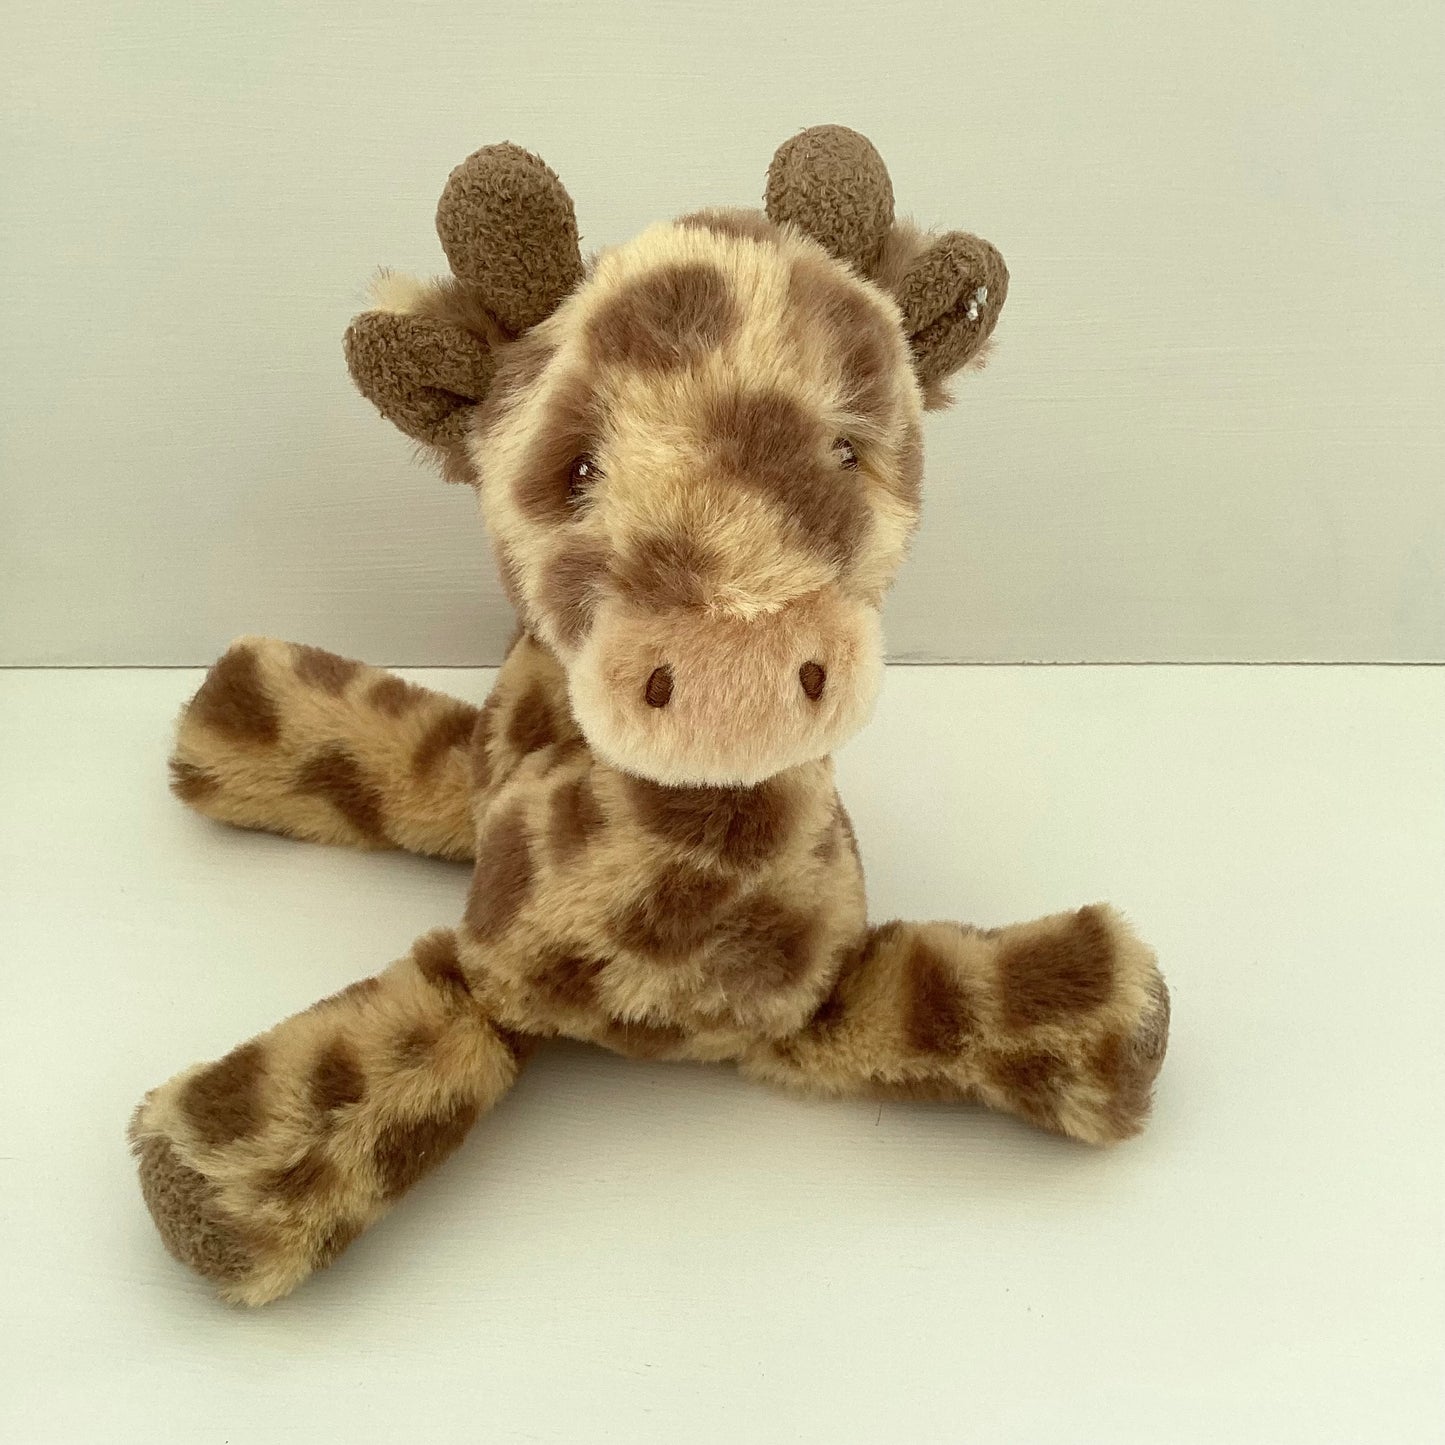 SAMMIE- giraffe teddy and white essentials mini gift box